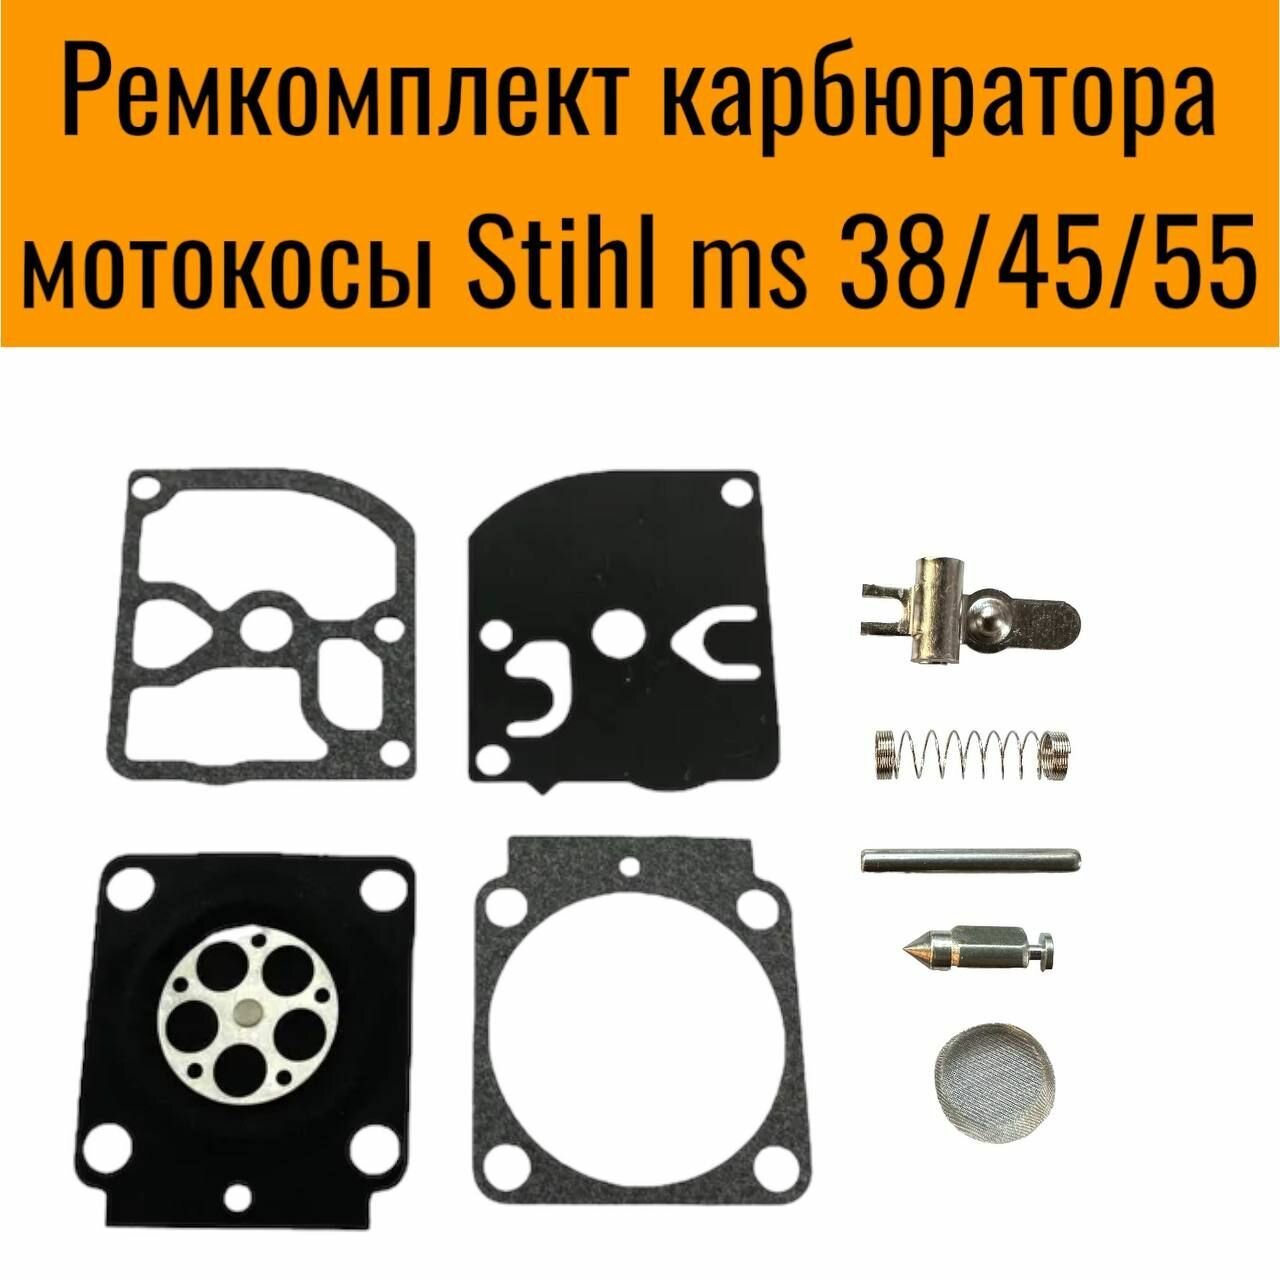 Ремкомплект карбюратора мотокосы STIHL FS 55, FS 38, FS 45.